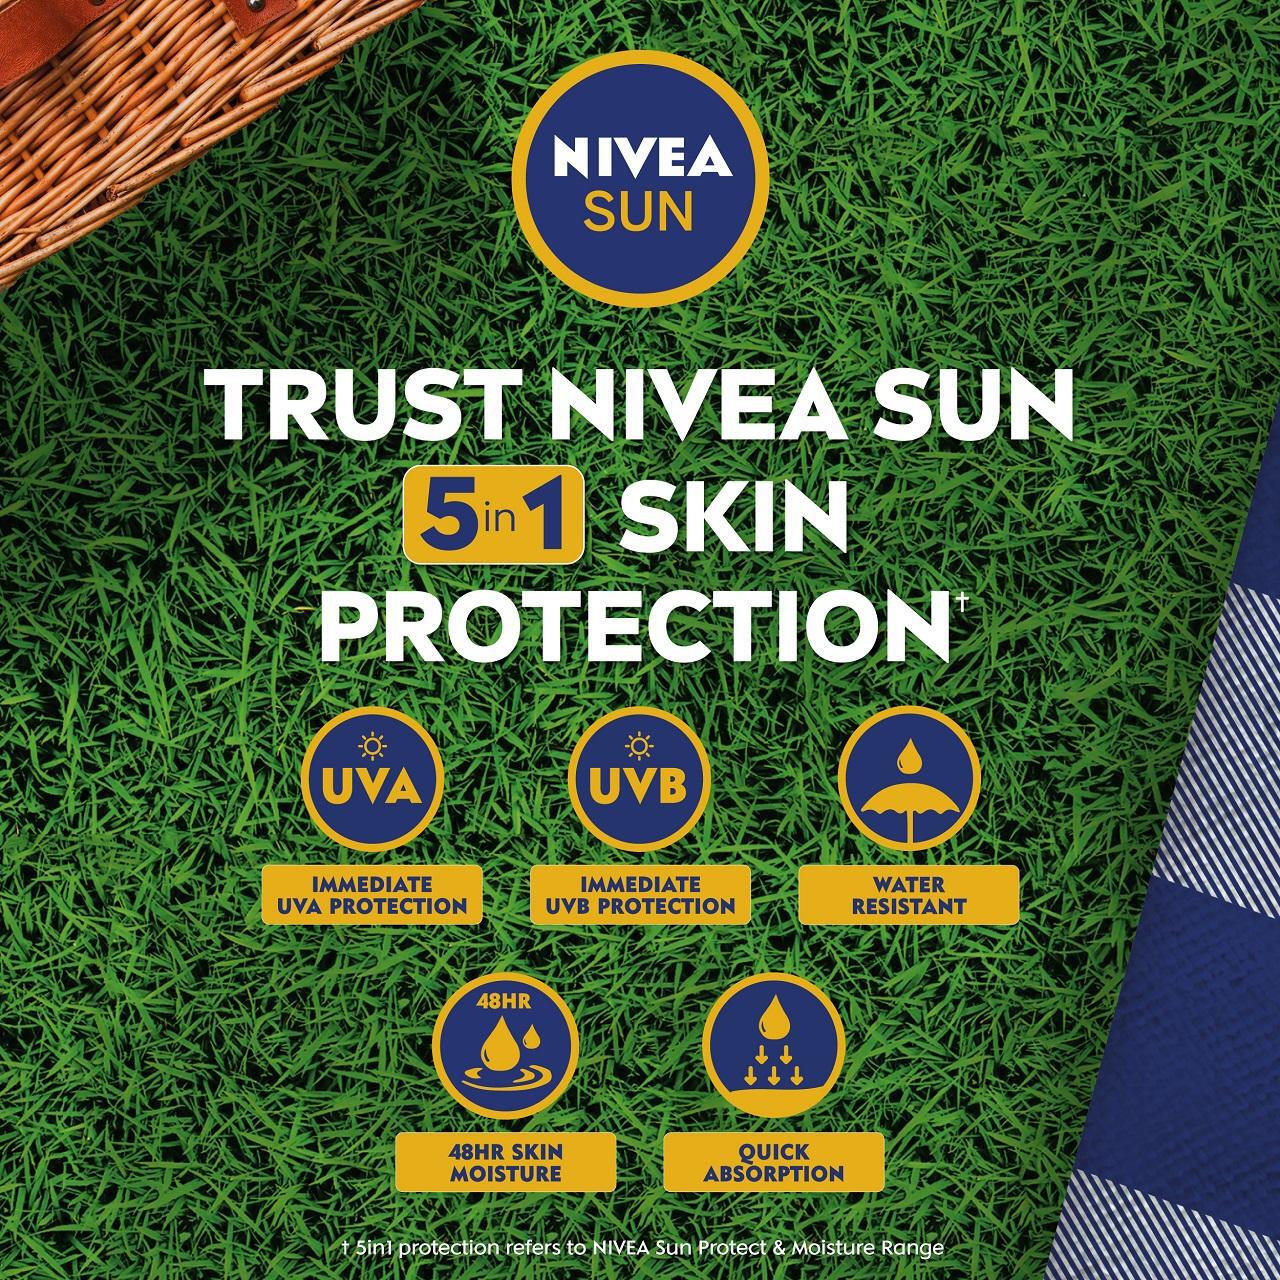 NIVEA SUN Protect & Moisture SPF30 Sun Cream Spray 200ml